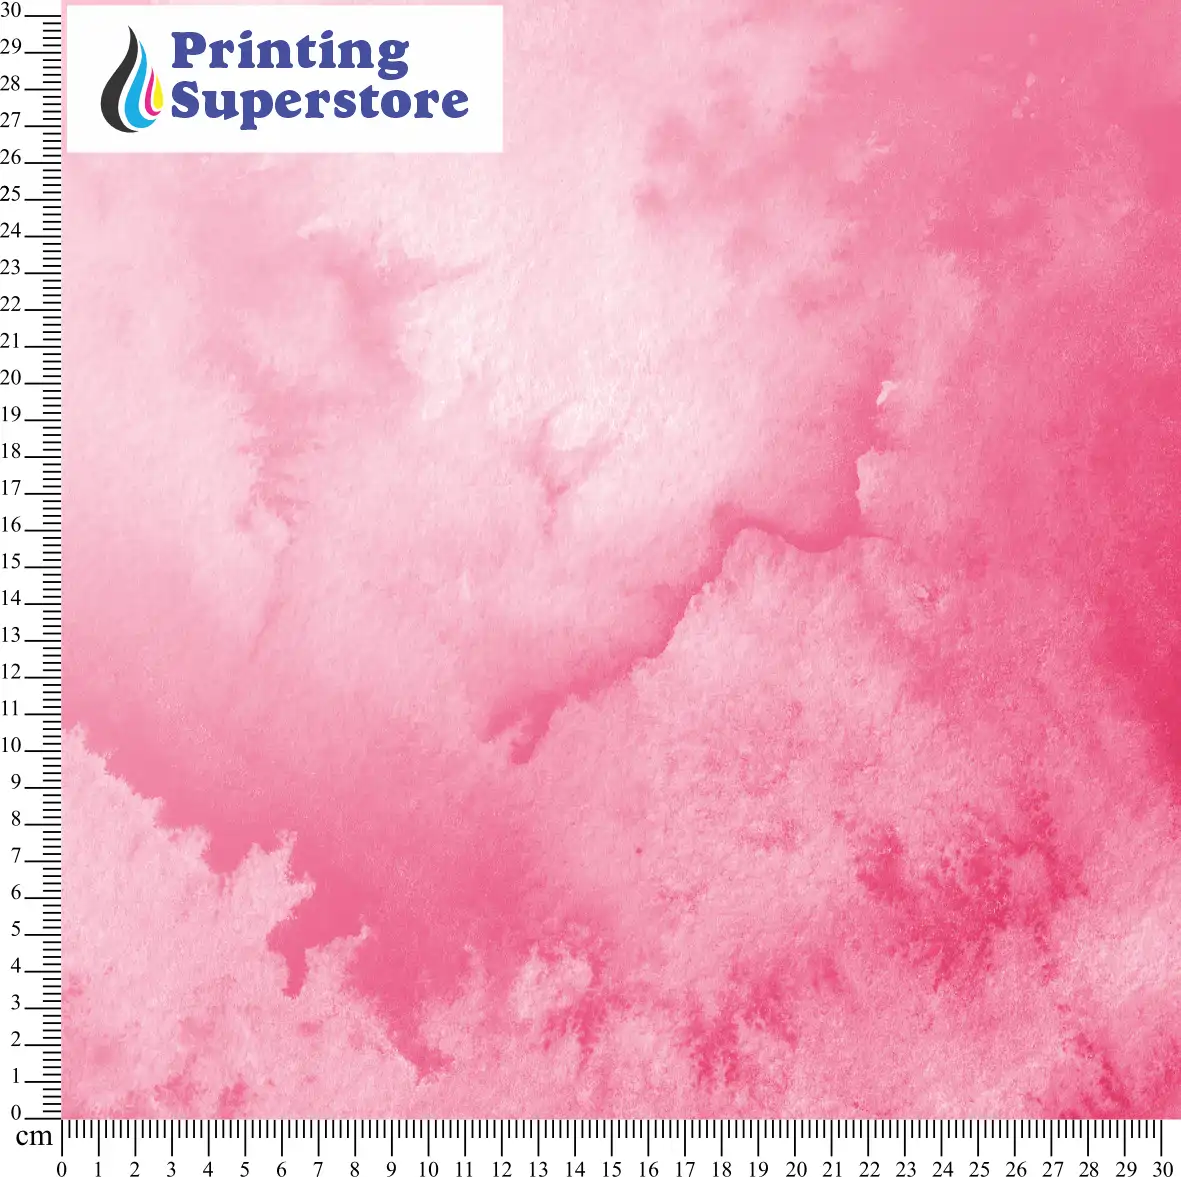 Pink Watercolour theme pattern printed on Self Adhesive Vinyl (SAV), Heat Transfer Vinyl (HTV) and Cardstock.